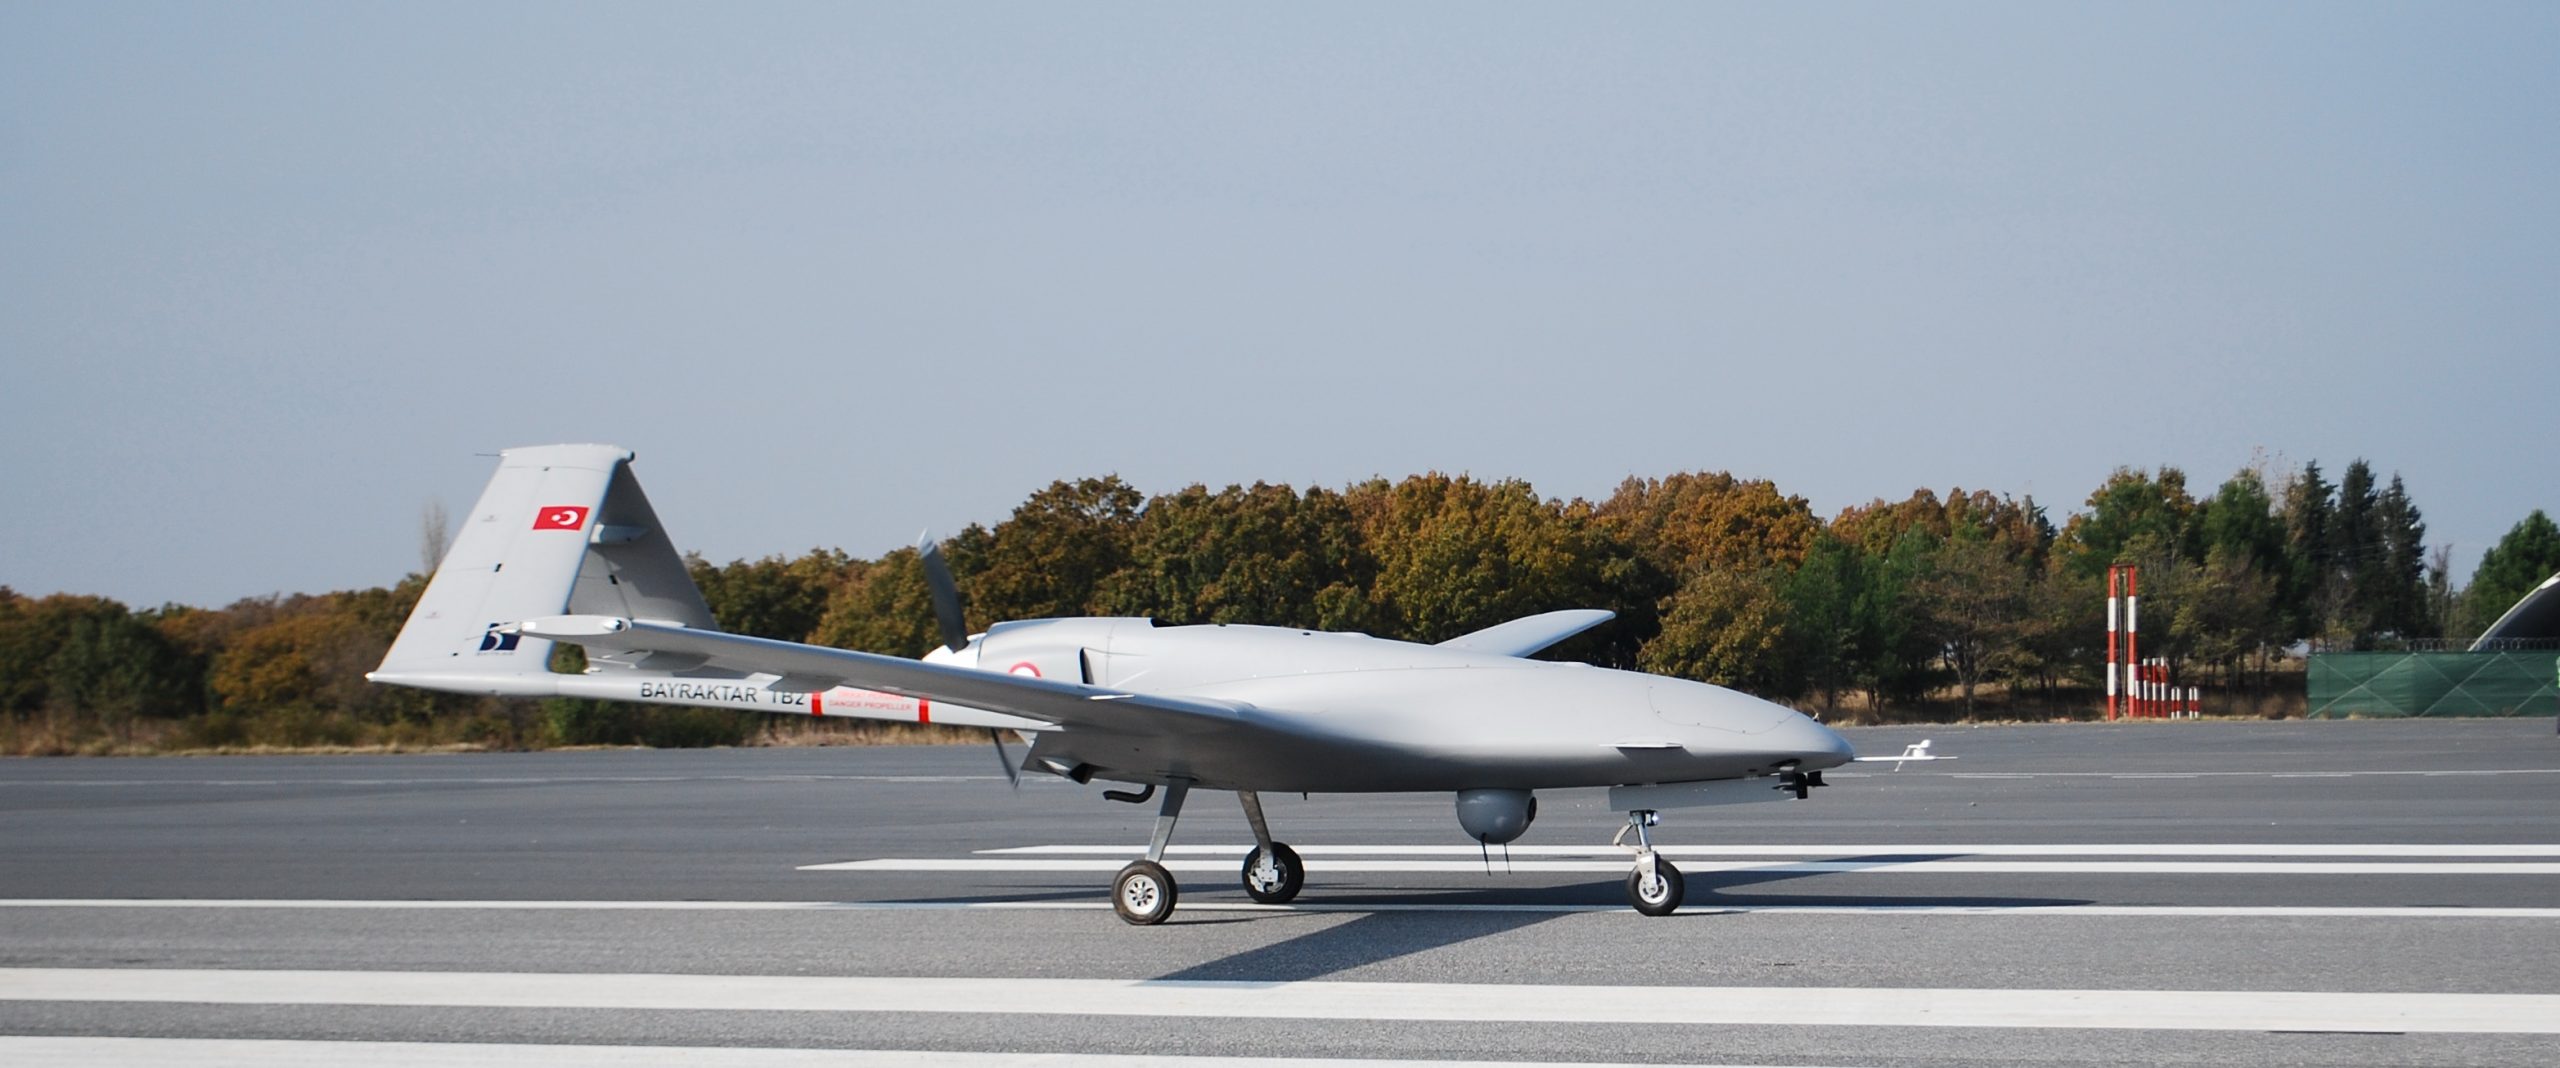 Image about s Latvia the Next NATO Nation to Order Bayraktar TB2 Drones?